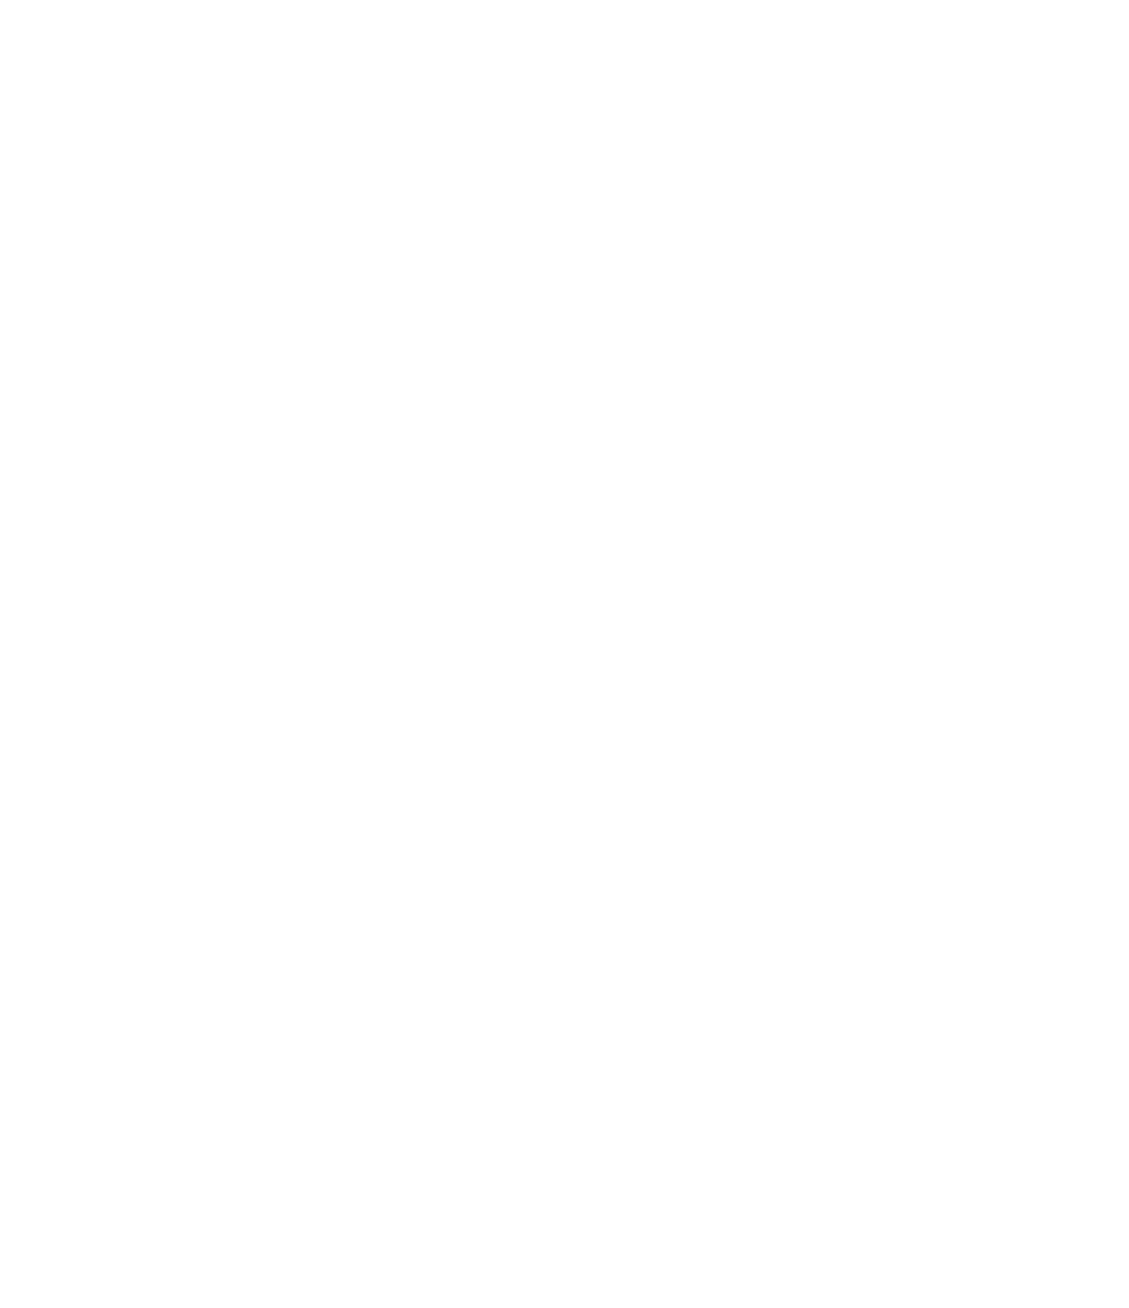 La Organic